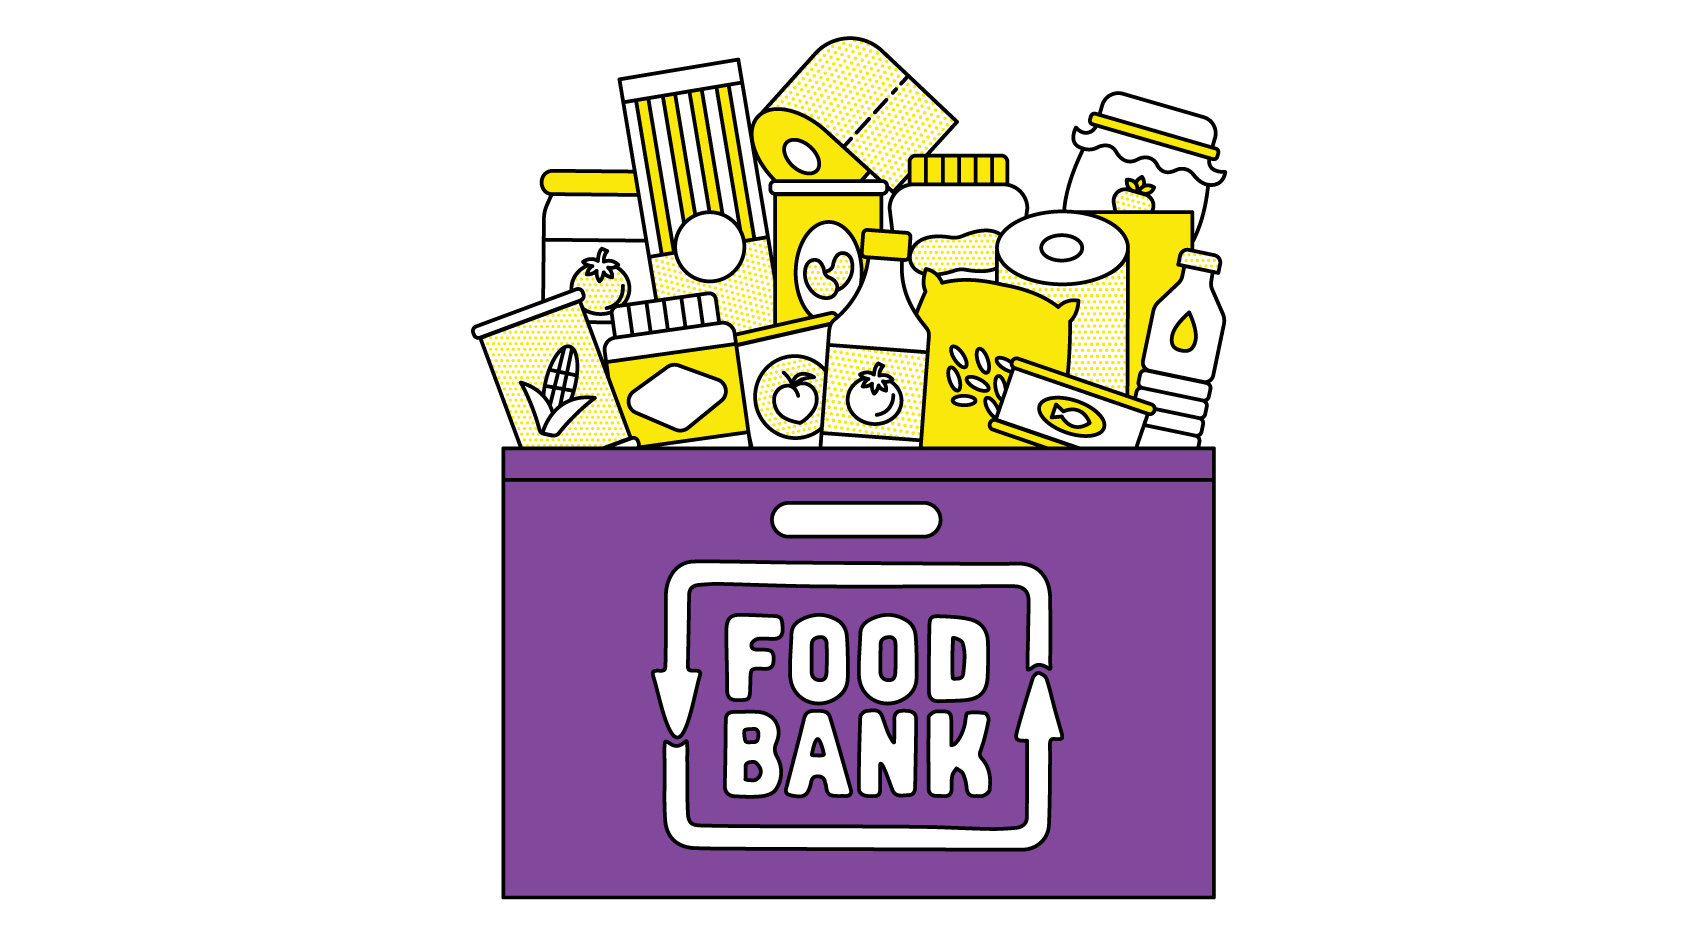 Our Foodbank partnership